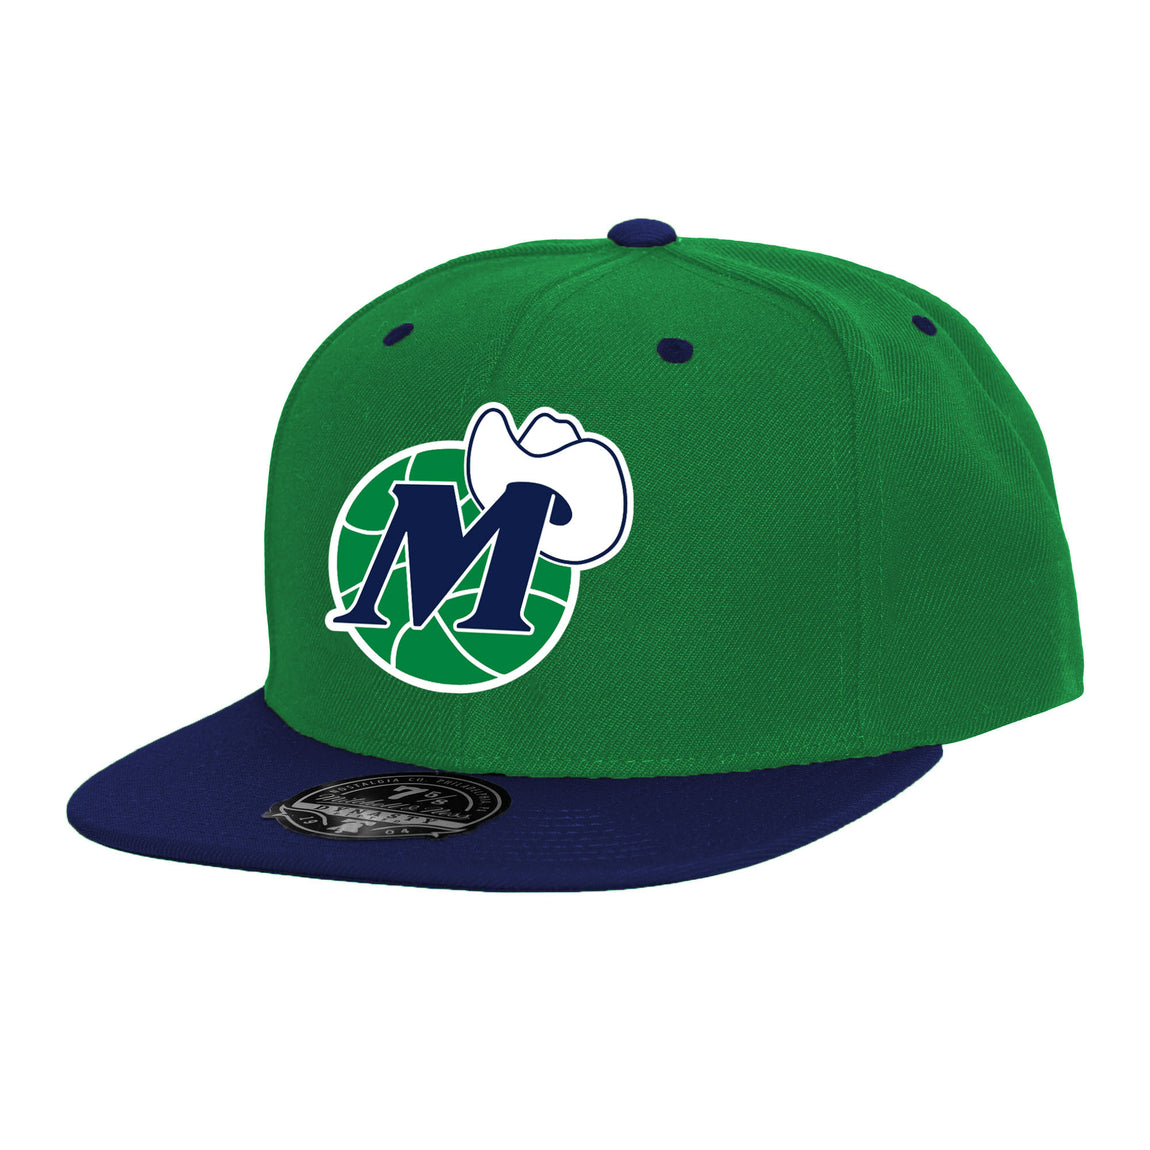 Mitchell & Ness Dallas Mavericks NBA 2 Tone Fitted Hardwood Classics Hat ( Green / Navy ) - Mitchell & Ness Dallas Mavericks NBA 2 Tone Fitted Hardwood Classics Hat ( Green / Navy ) - 